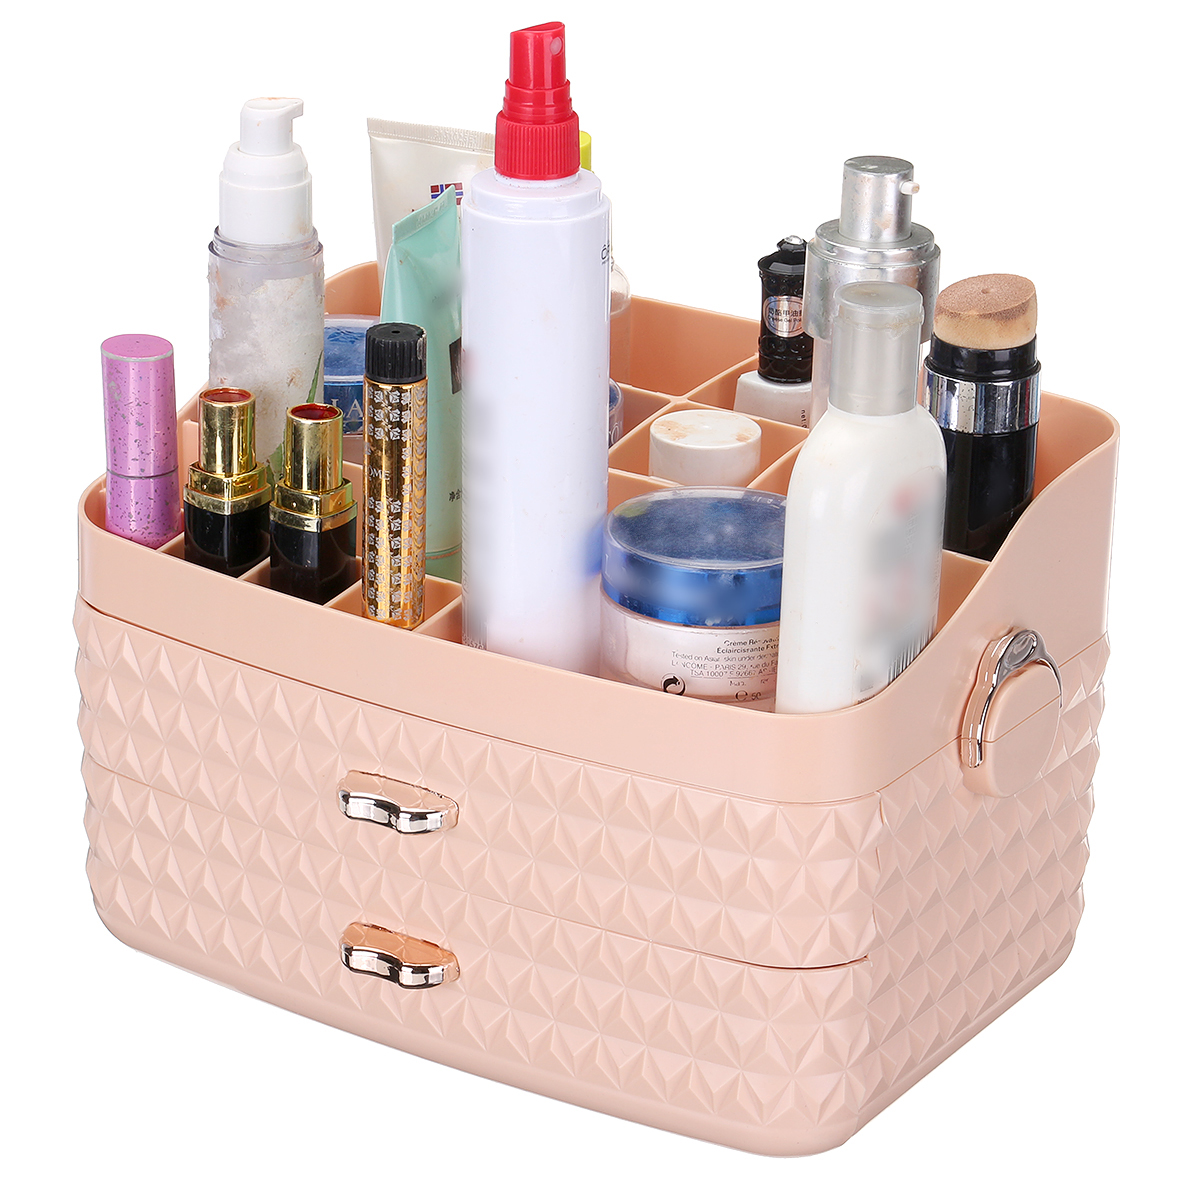 Dustproof-Cosmetic-Storage-Box-with-Drawer-Large-Capacity-Desktop-Furnishings-Organizer-Home-Desk-Su-1777438-28